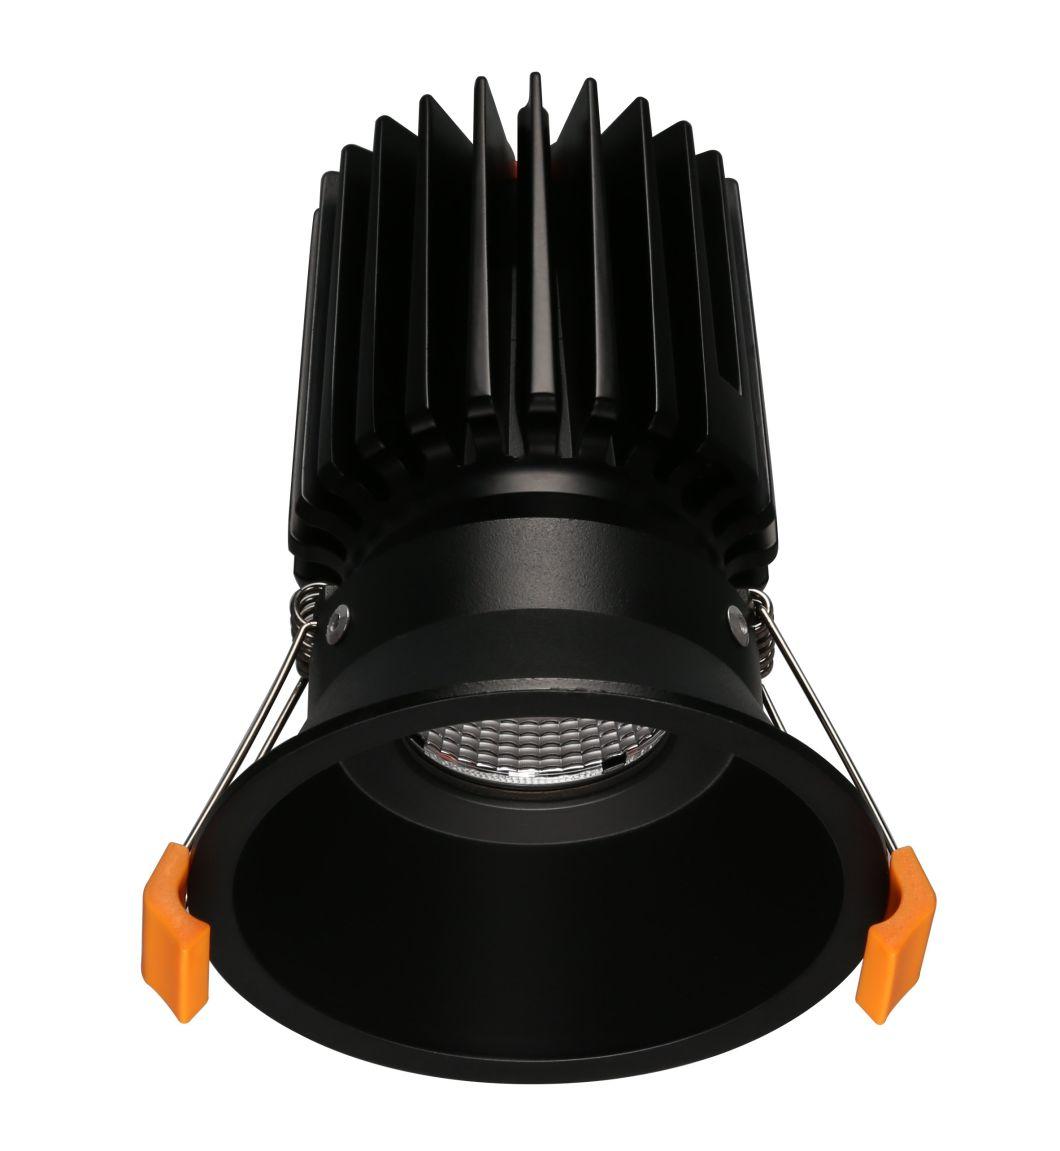 Black LED Downlight MR16/GU10 Frame Plus COB Source LED Downlight